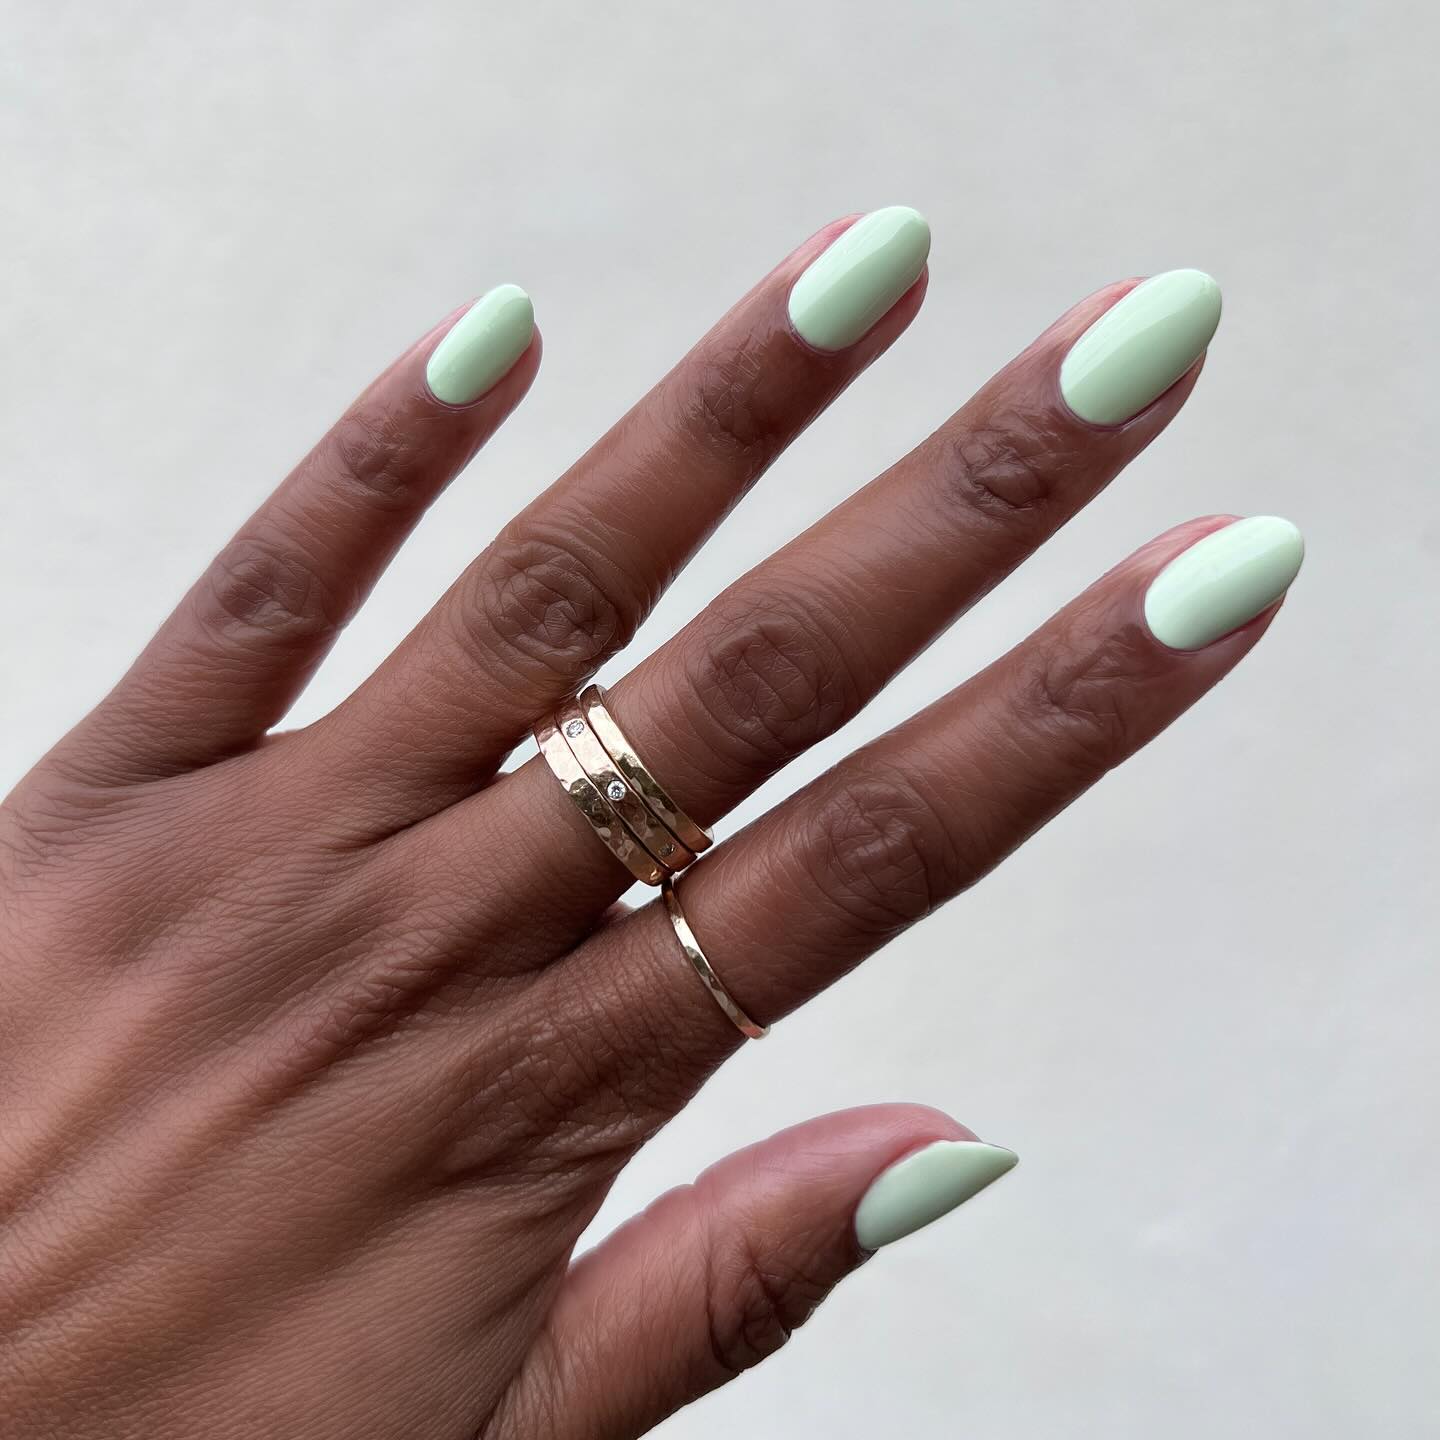 @themaniclub mint green manicure